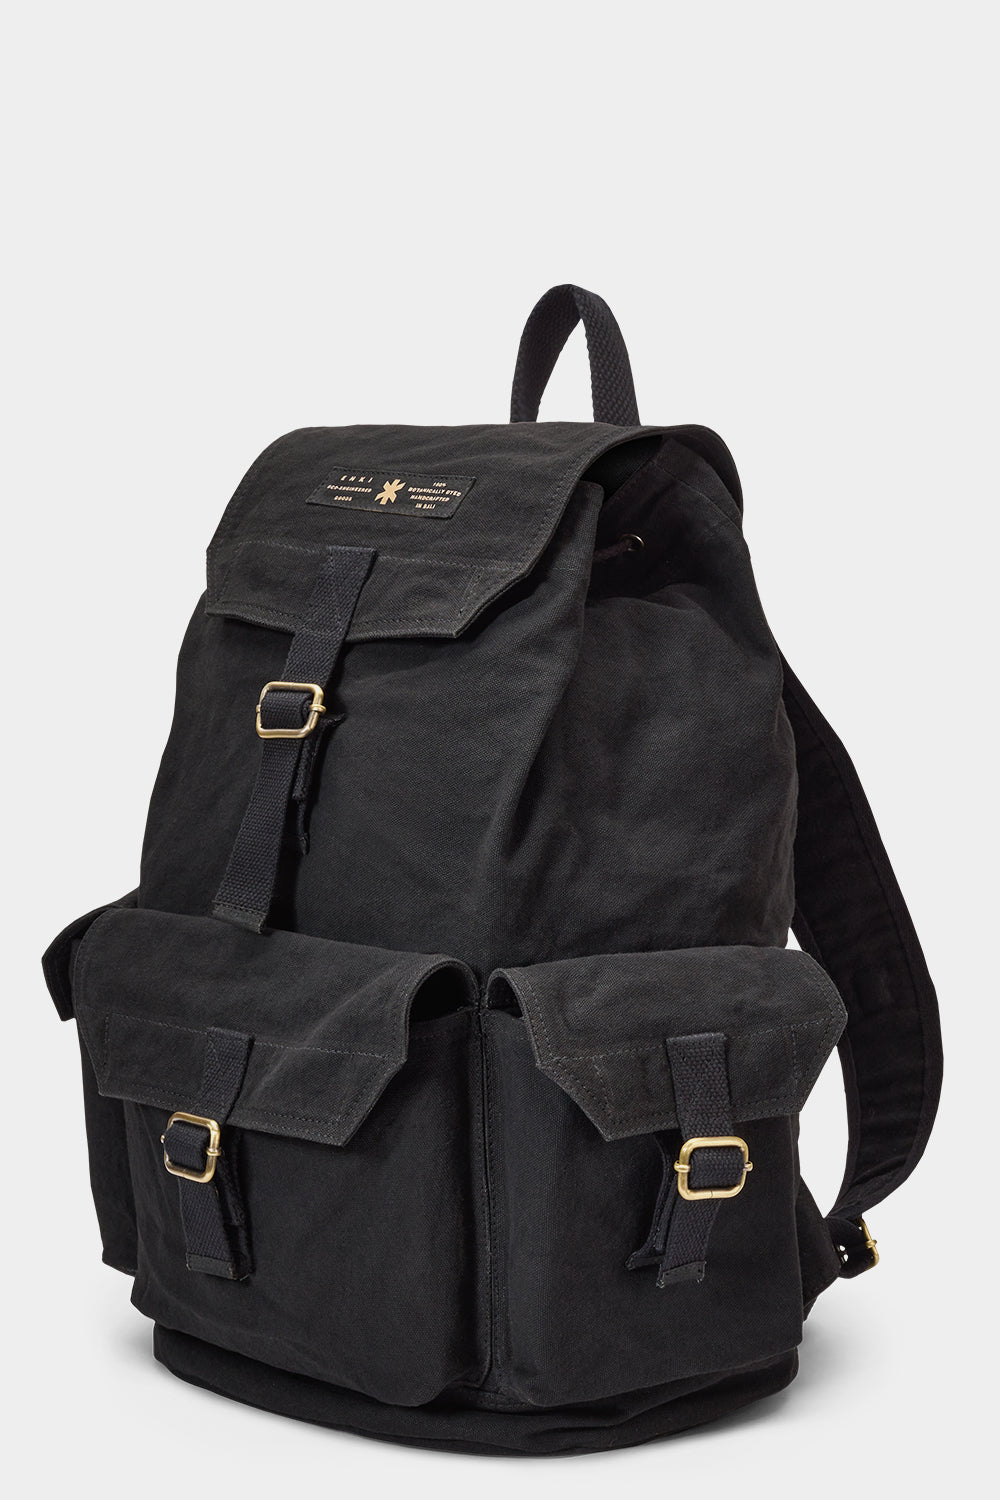 www.enkieyewear.com Enki Eco Anteros Men’s and Women’s Drawstring Backpack